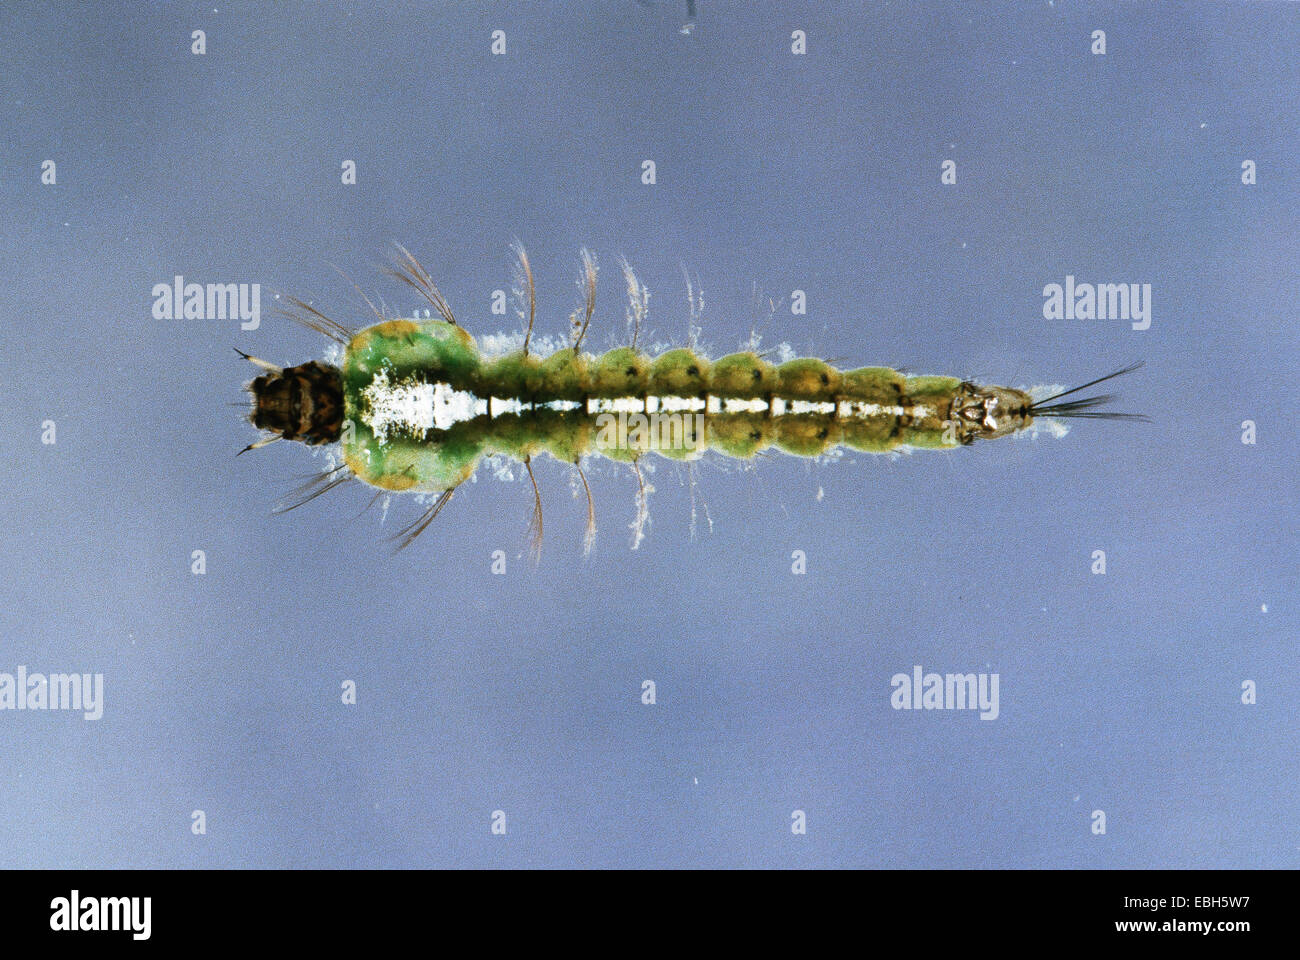 anopheles mosquito larva (Anopheles spec.). Stock Photo